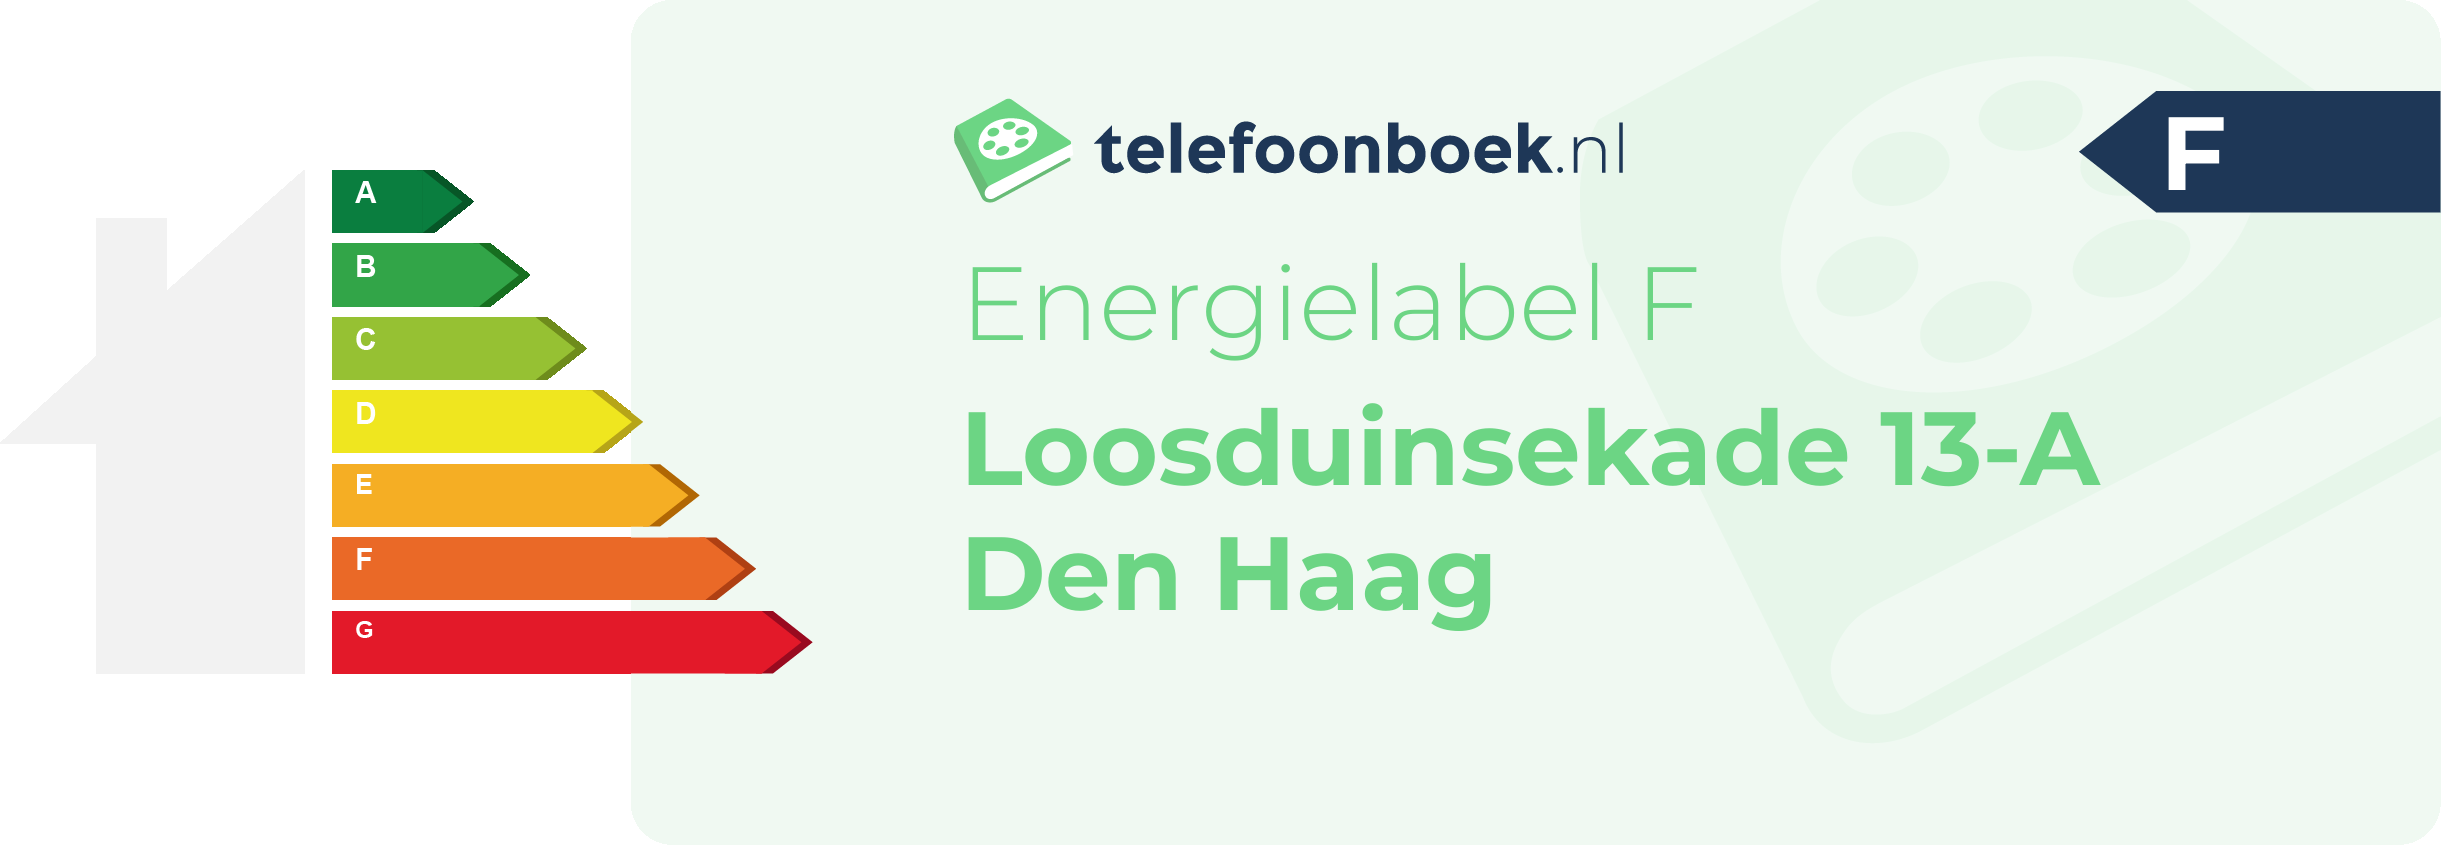 Energielabel Loosduinsekade 13-A Den Haag